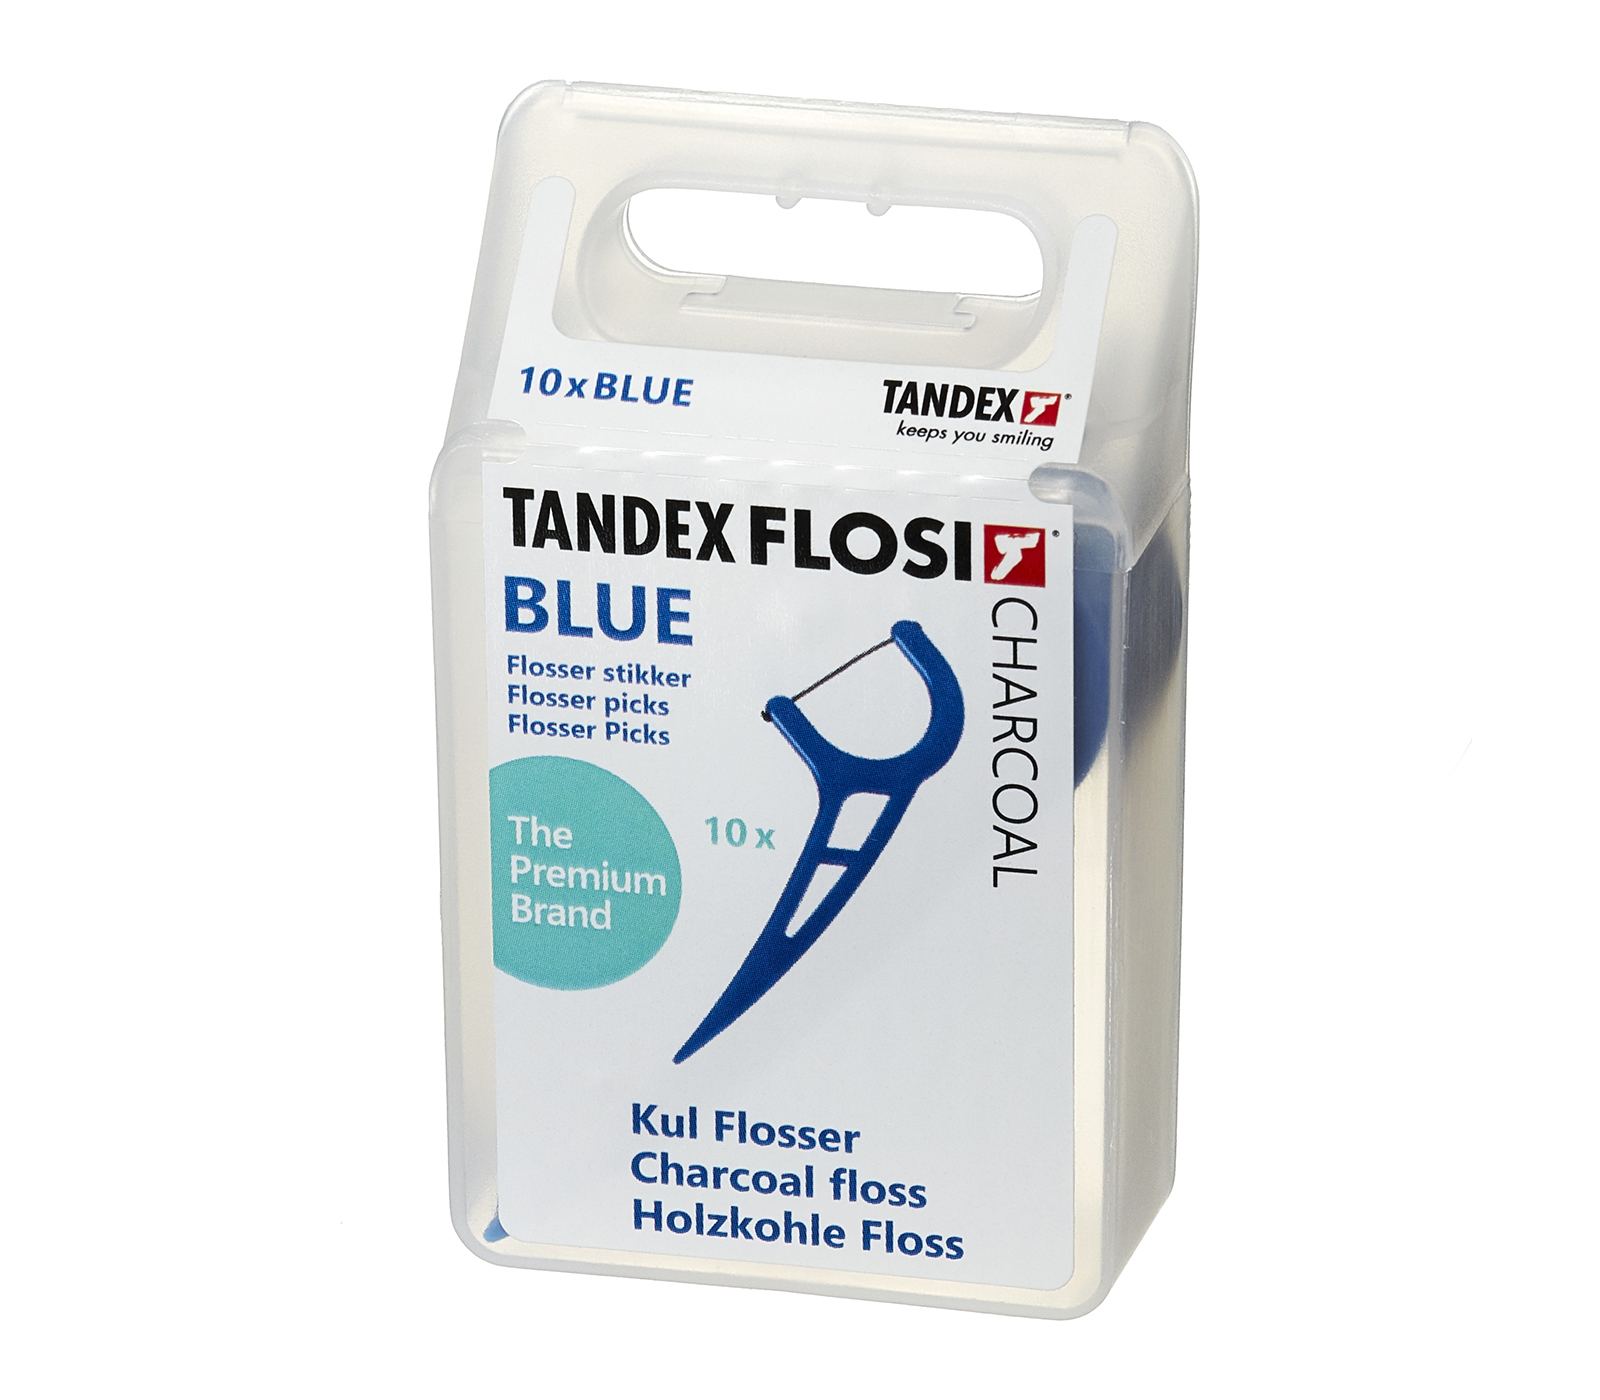 Tandex Flosi Flosser Blue 1